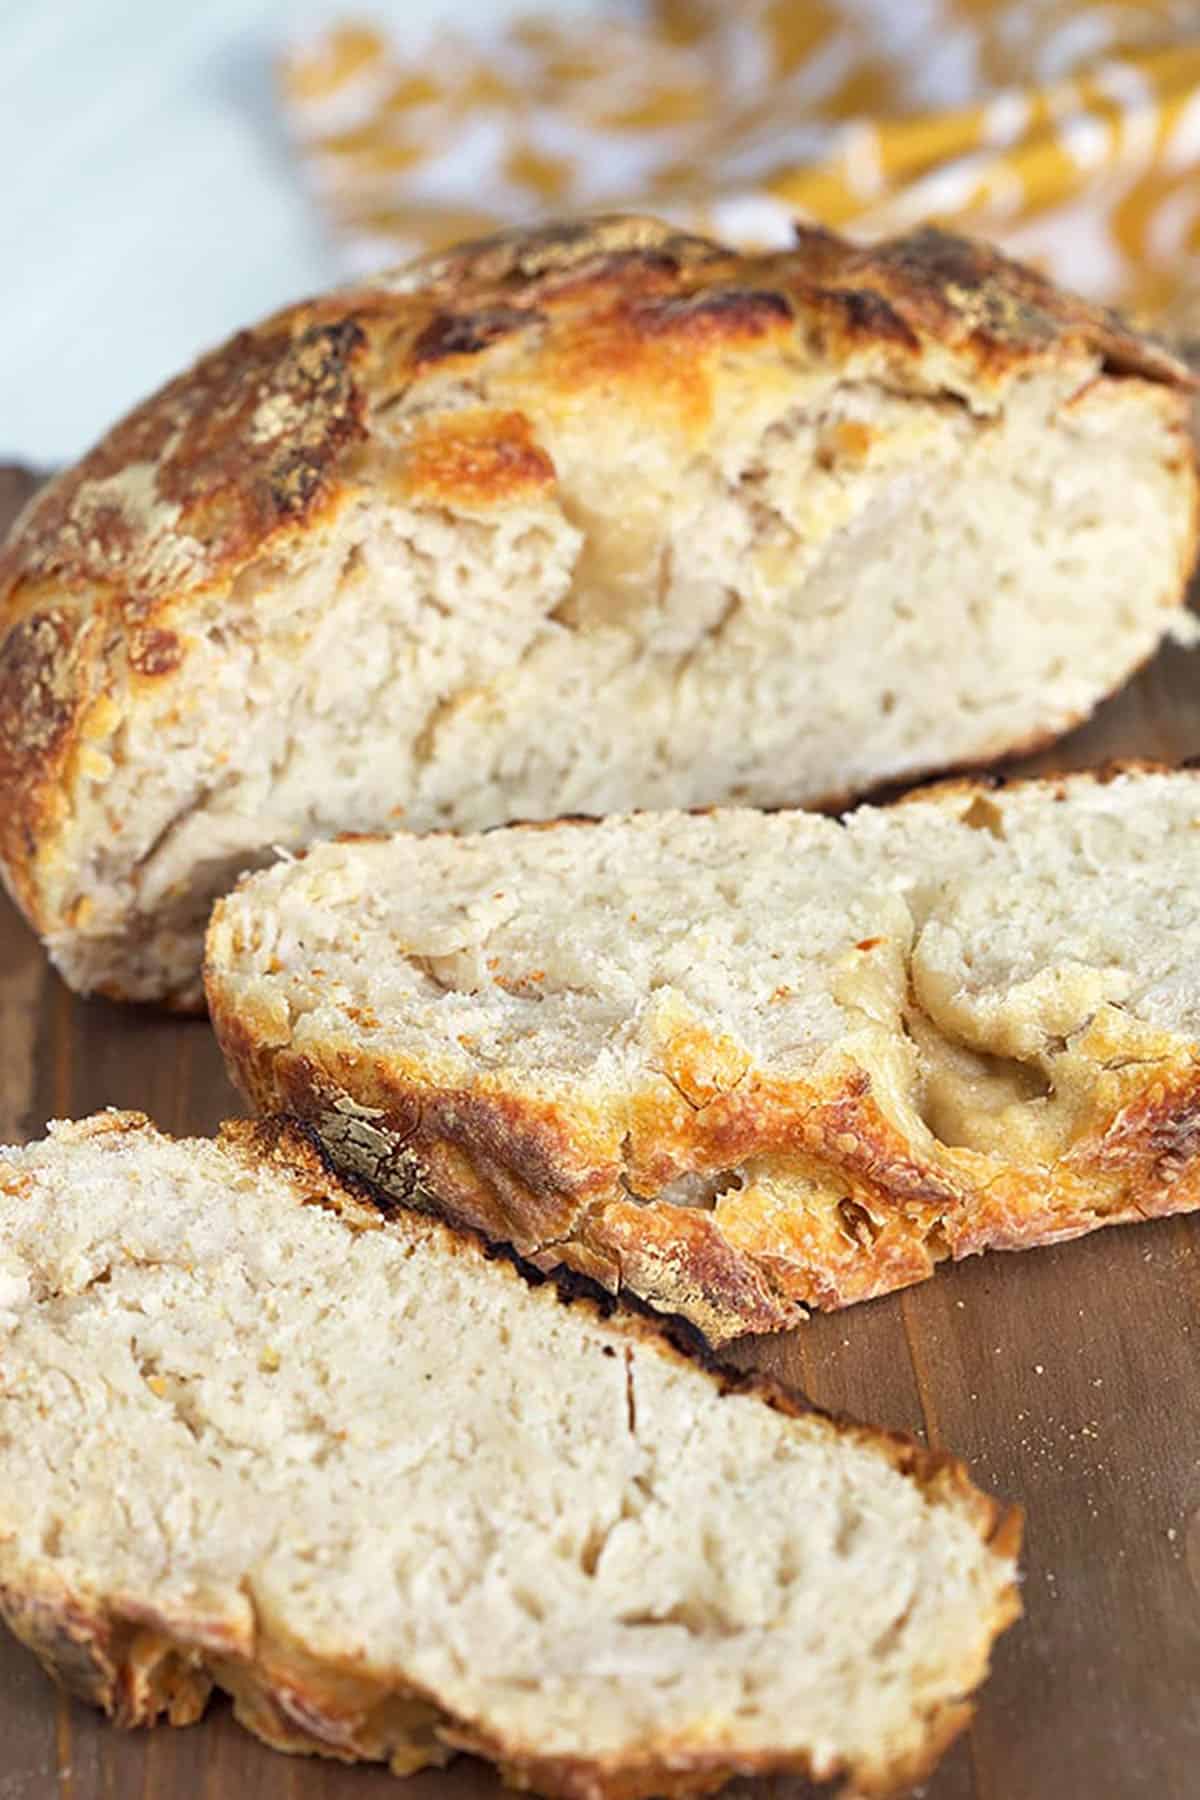 Sourdough bread on an olivewood board.